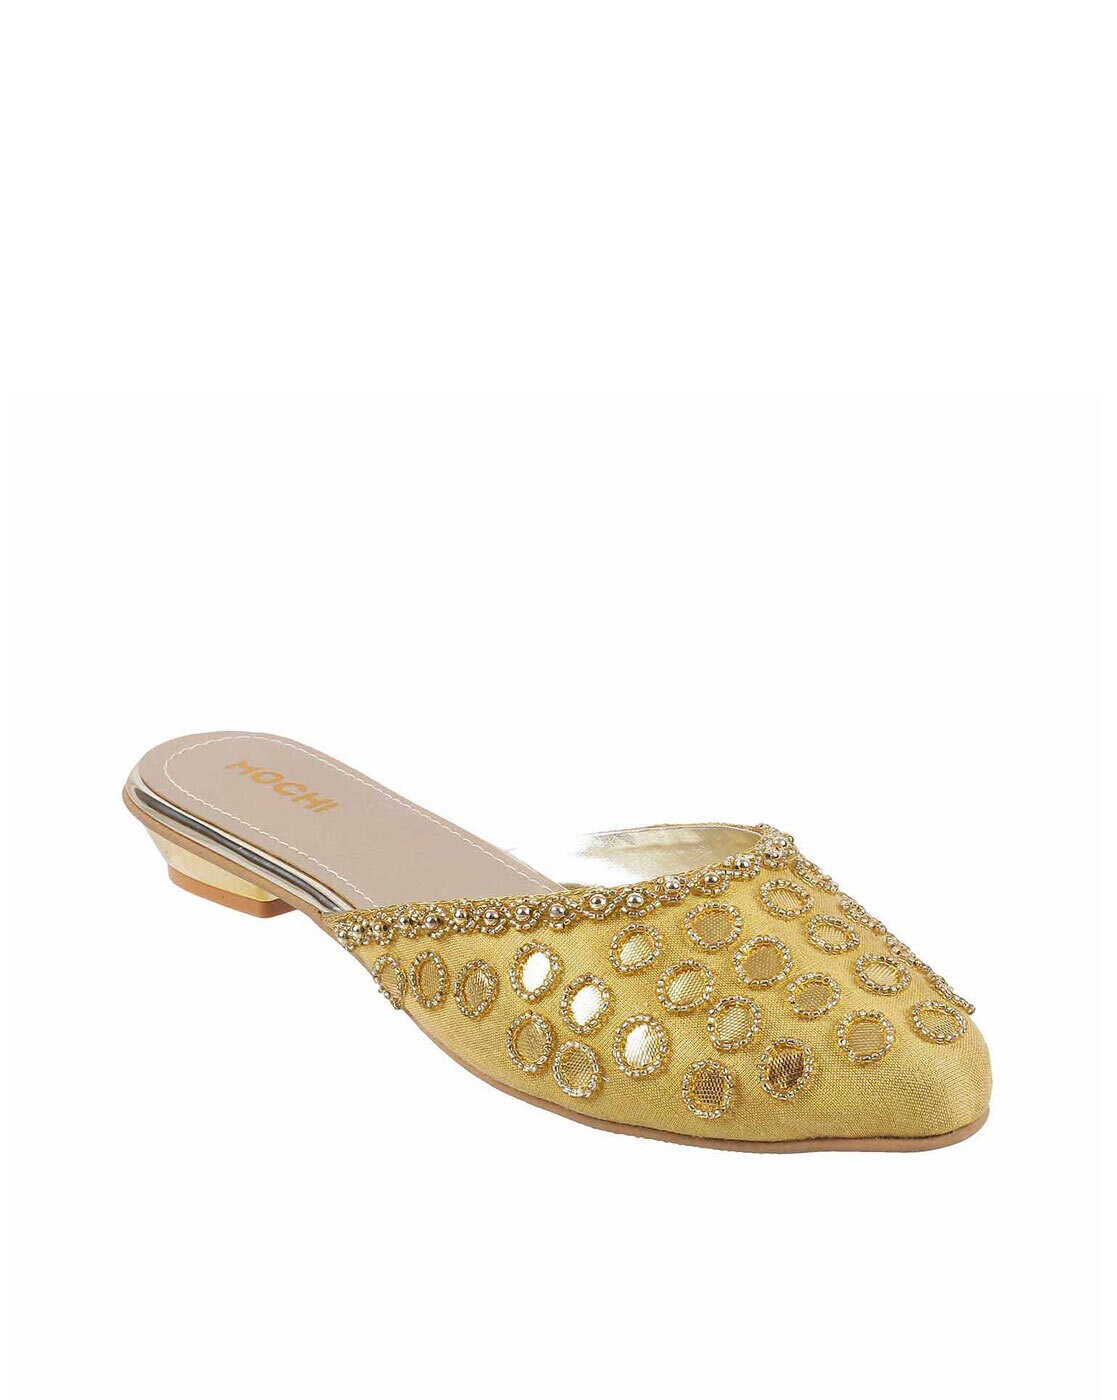 Buy Gold Flat Sandals for Women by Mochi Online